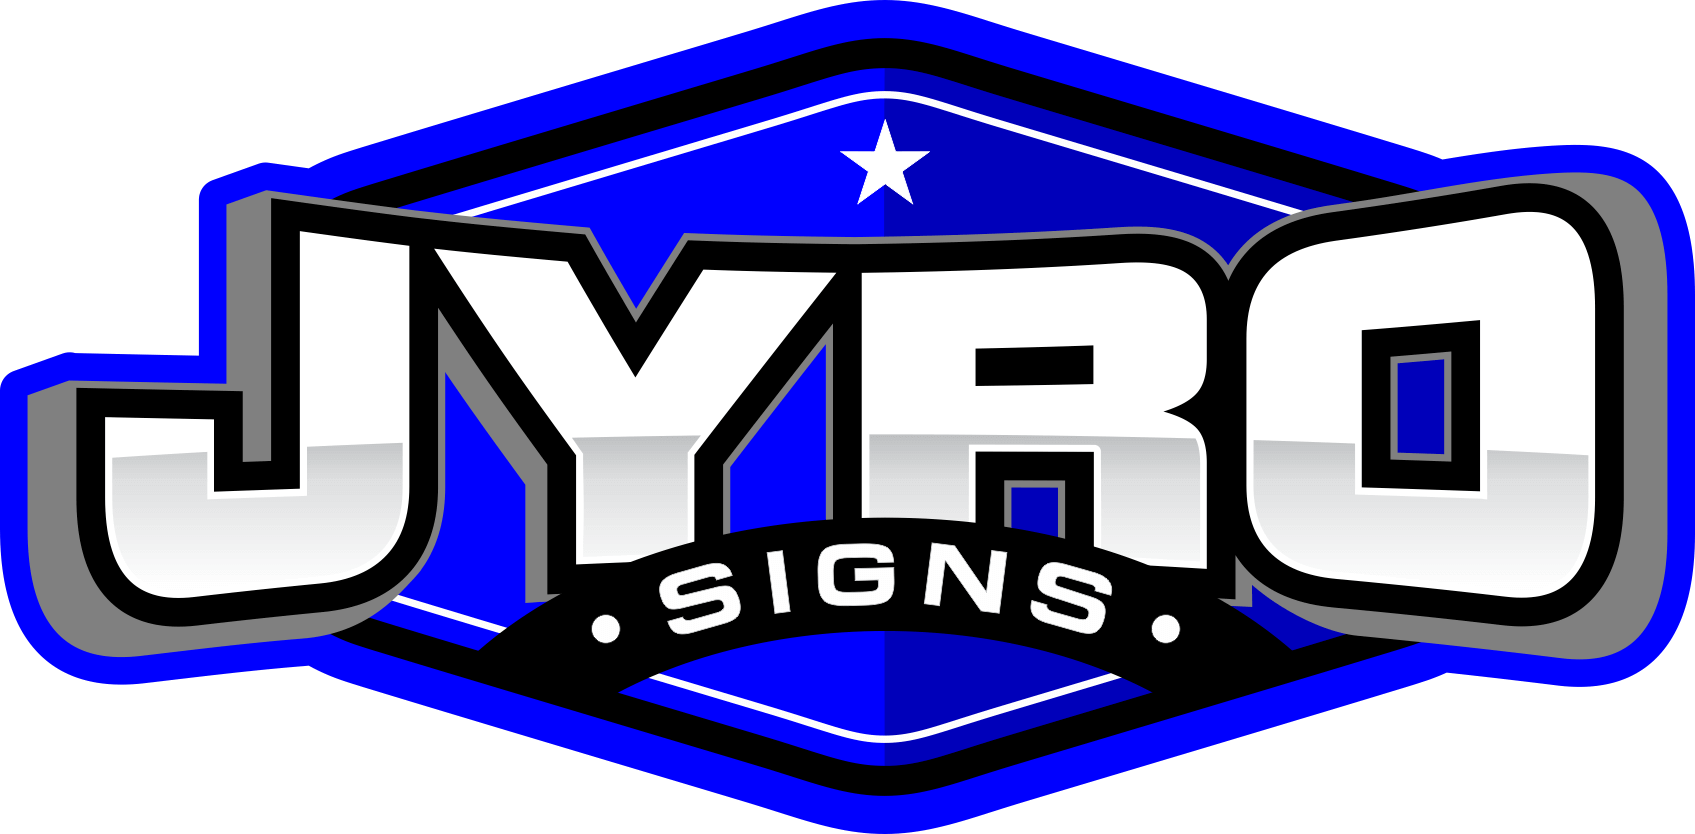 Jyro Signs, LLC